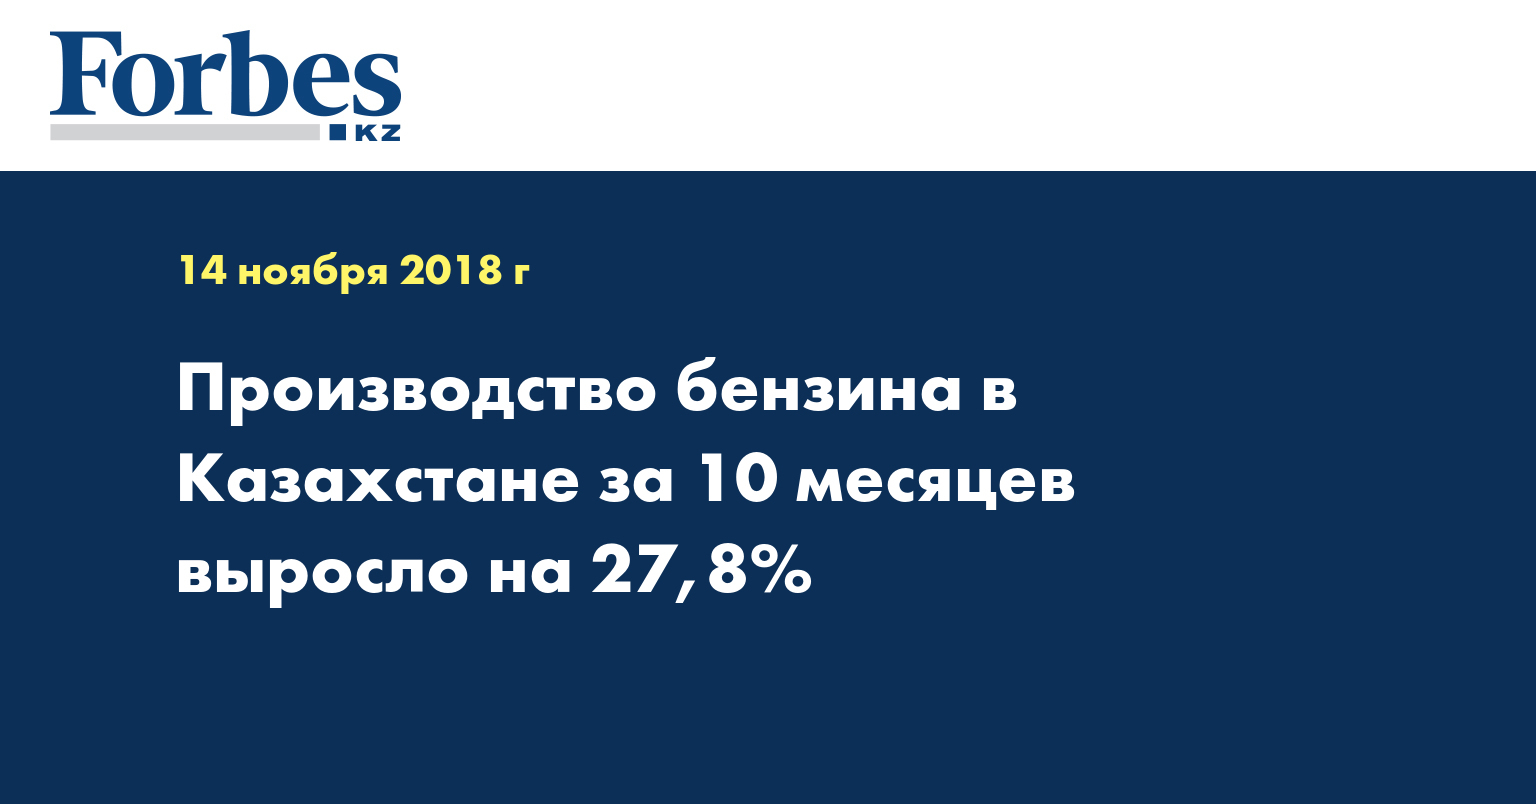 Производство бензина в Казахстане за 10 месяцев выросло на 27,8%